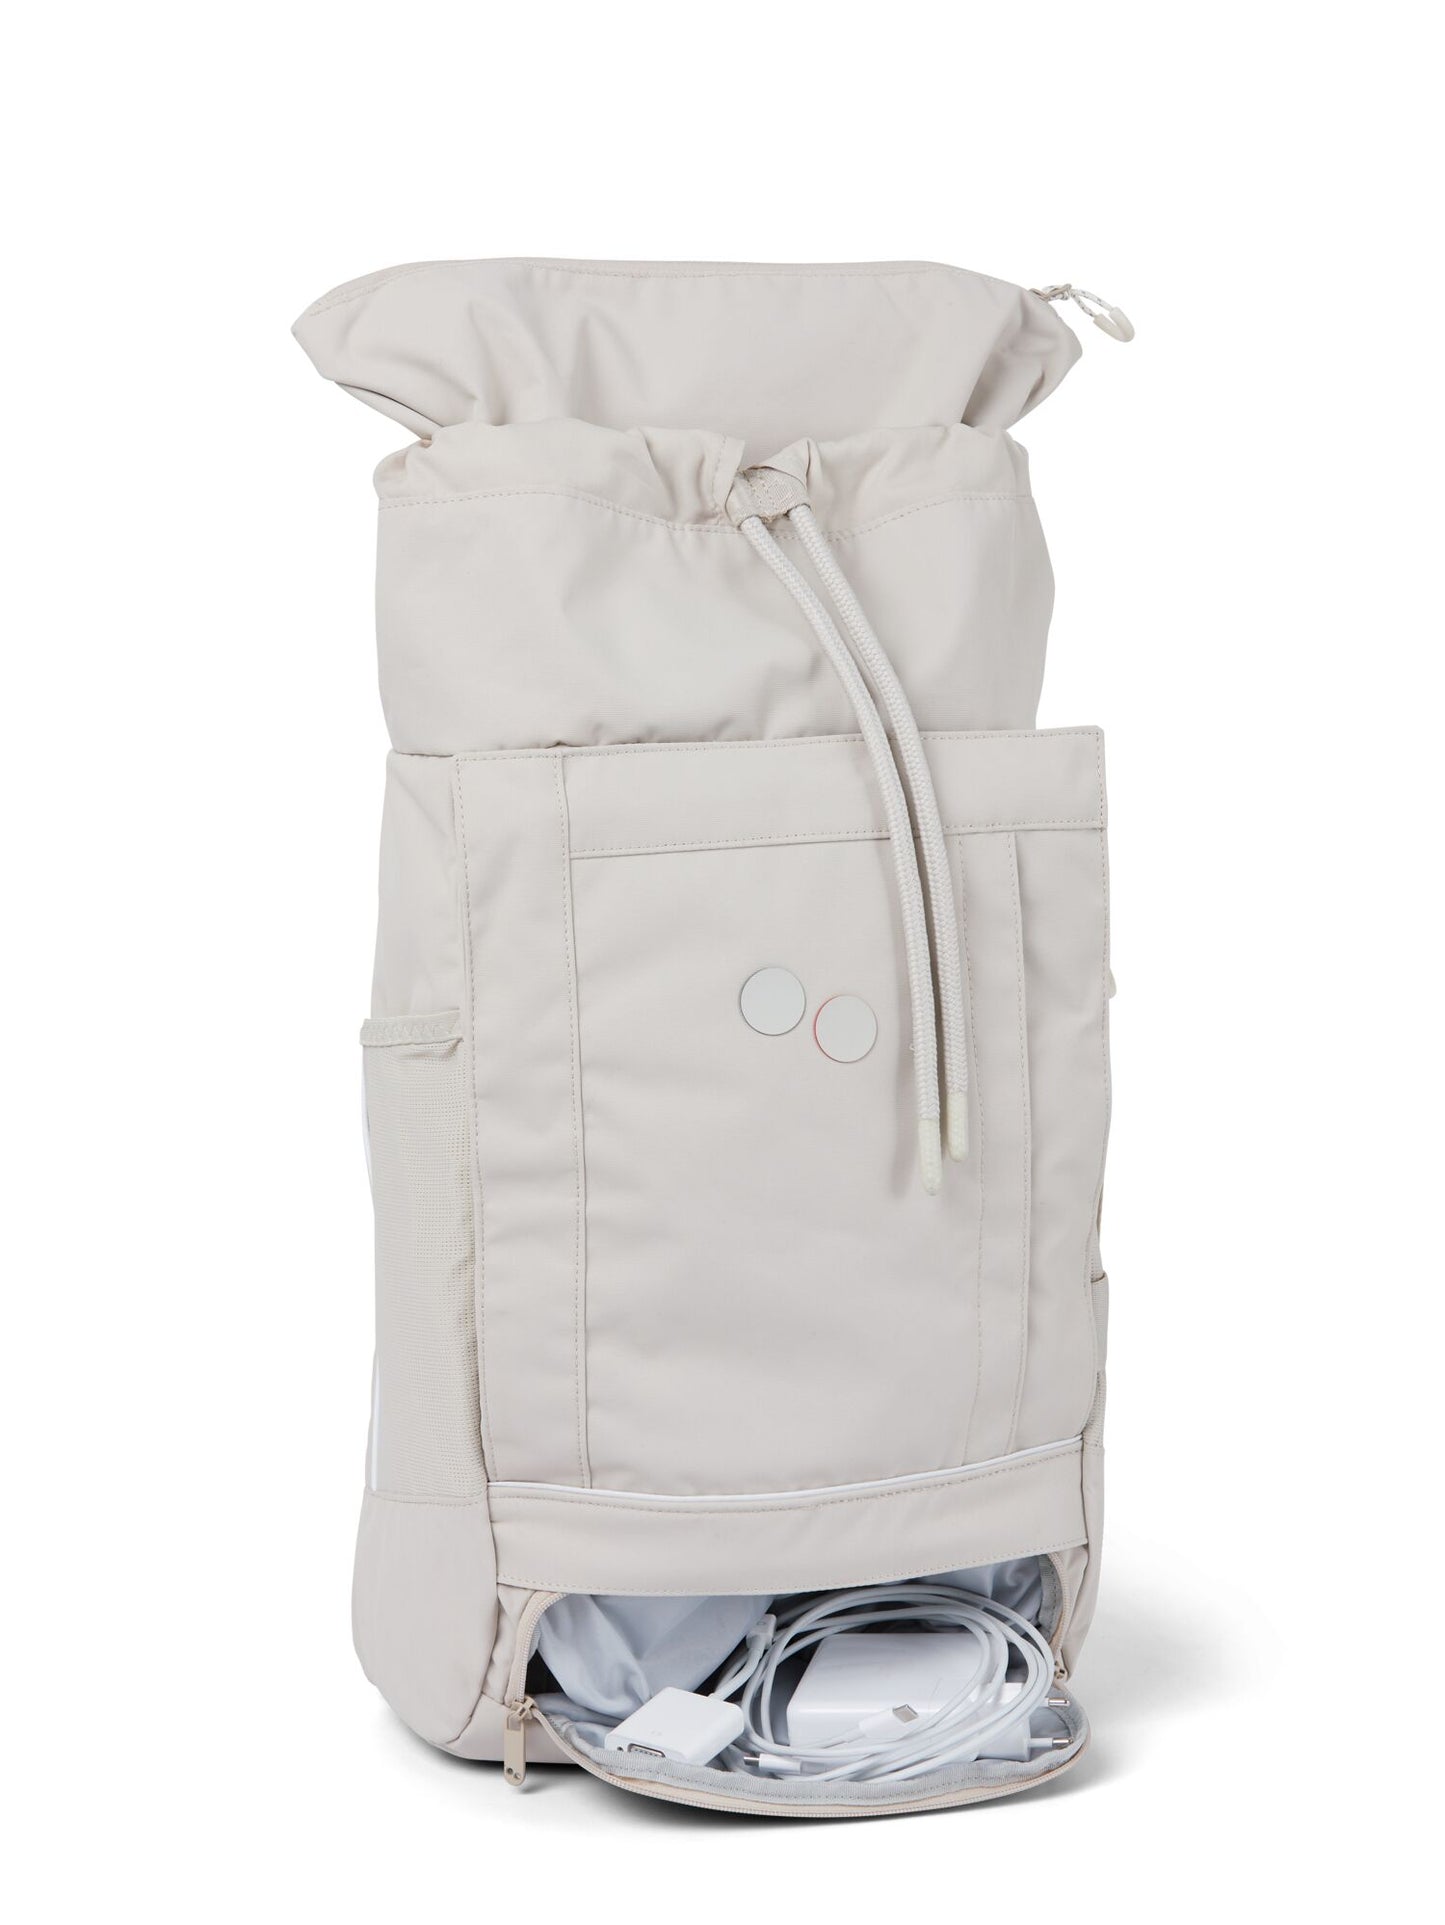 pinqponq-backpack-Blok-Medium-Cliff-Beige-detail